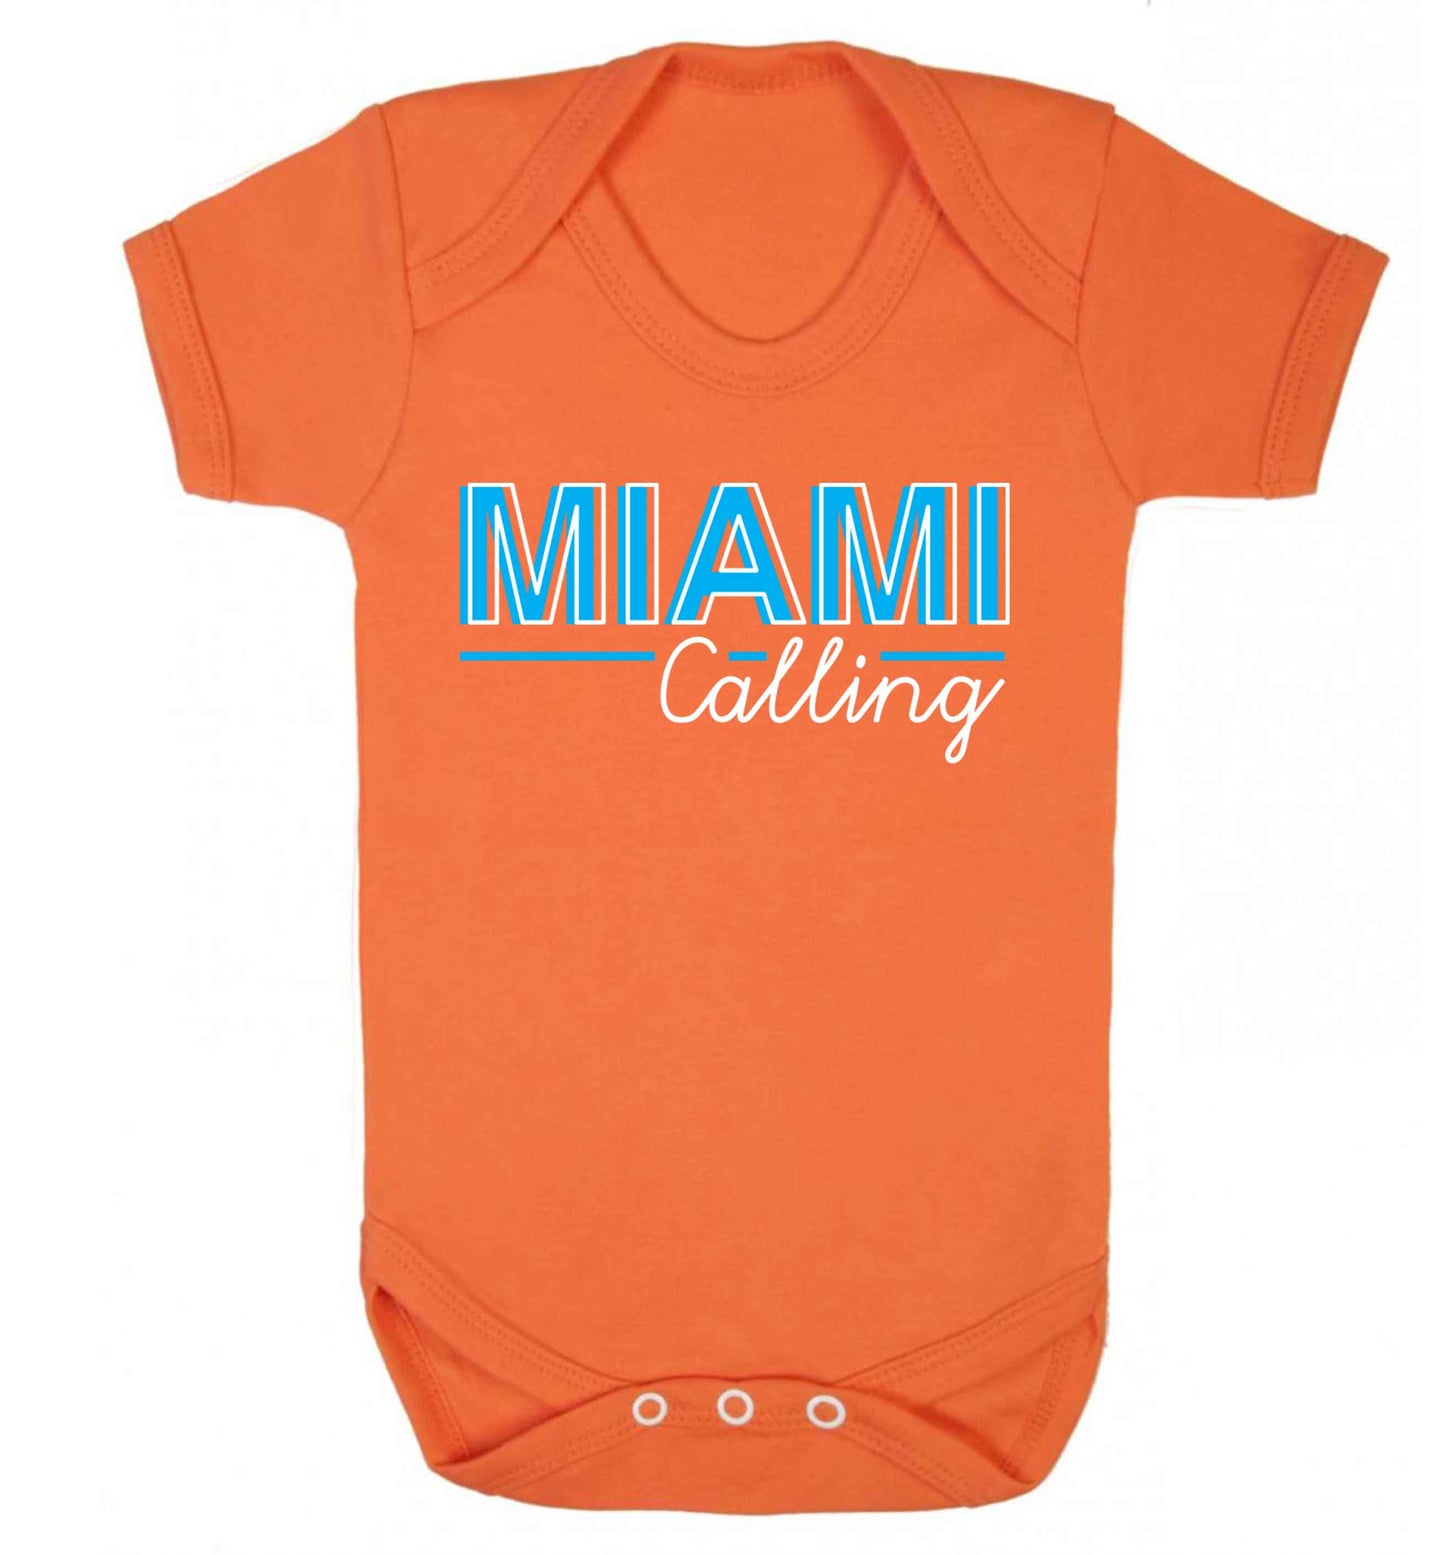 Miami calling Baby Vest orange 18-24 months